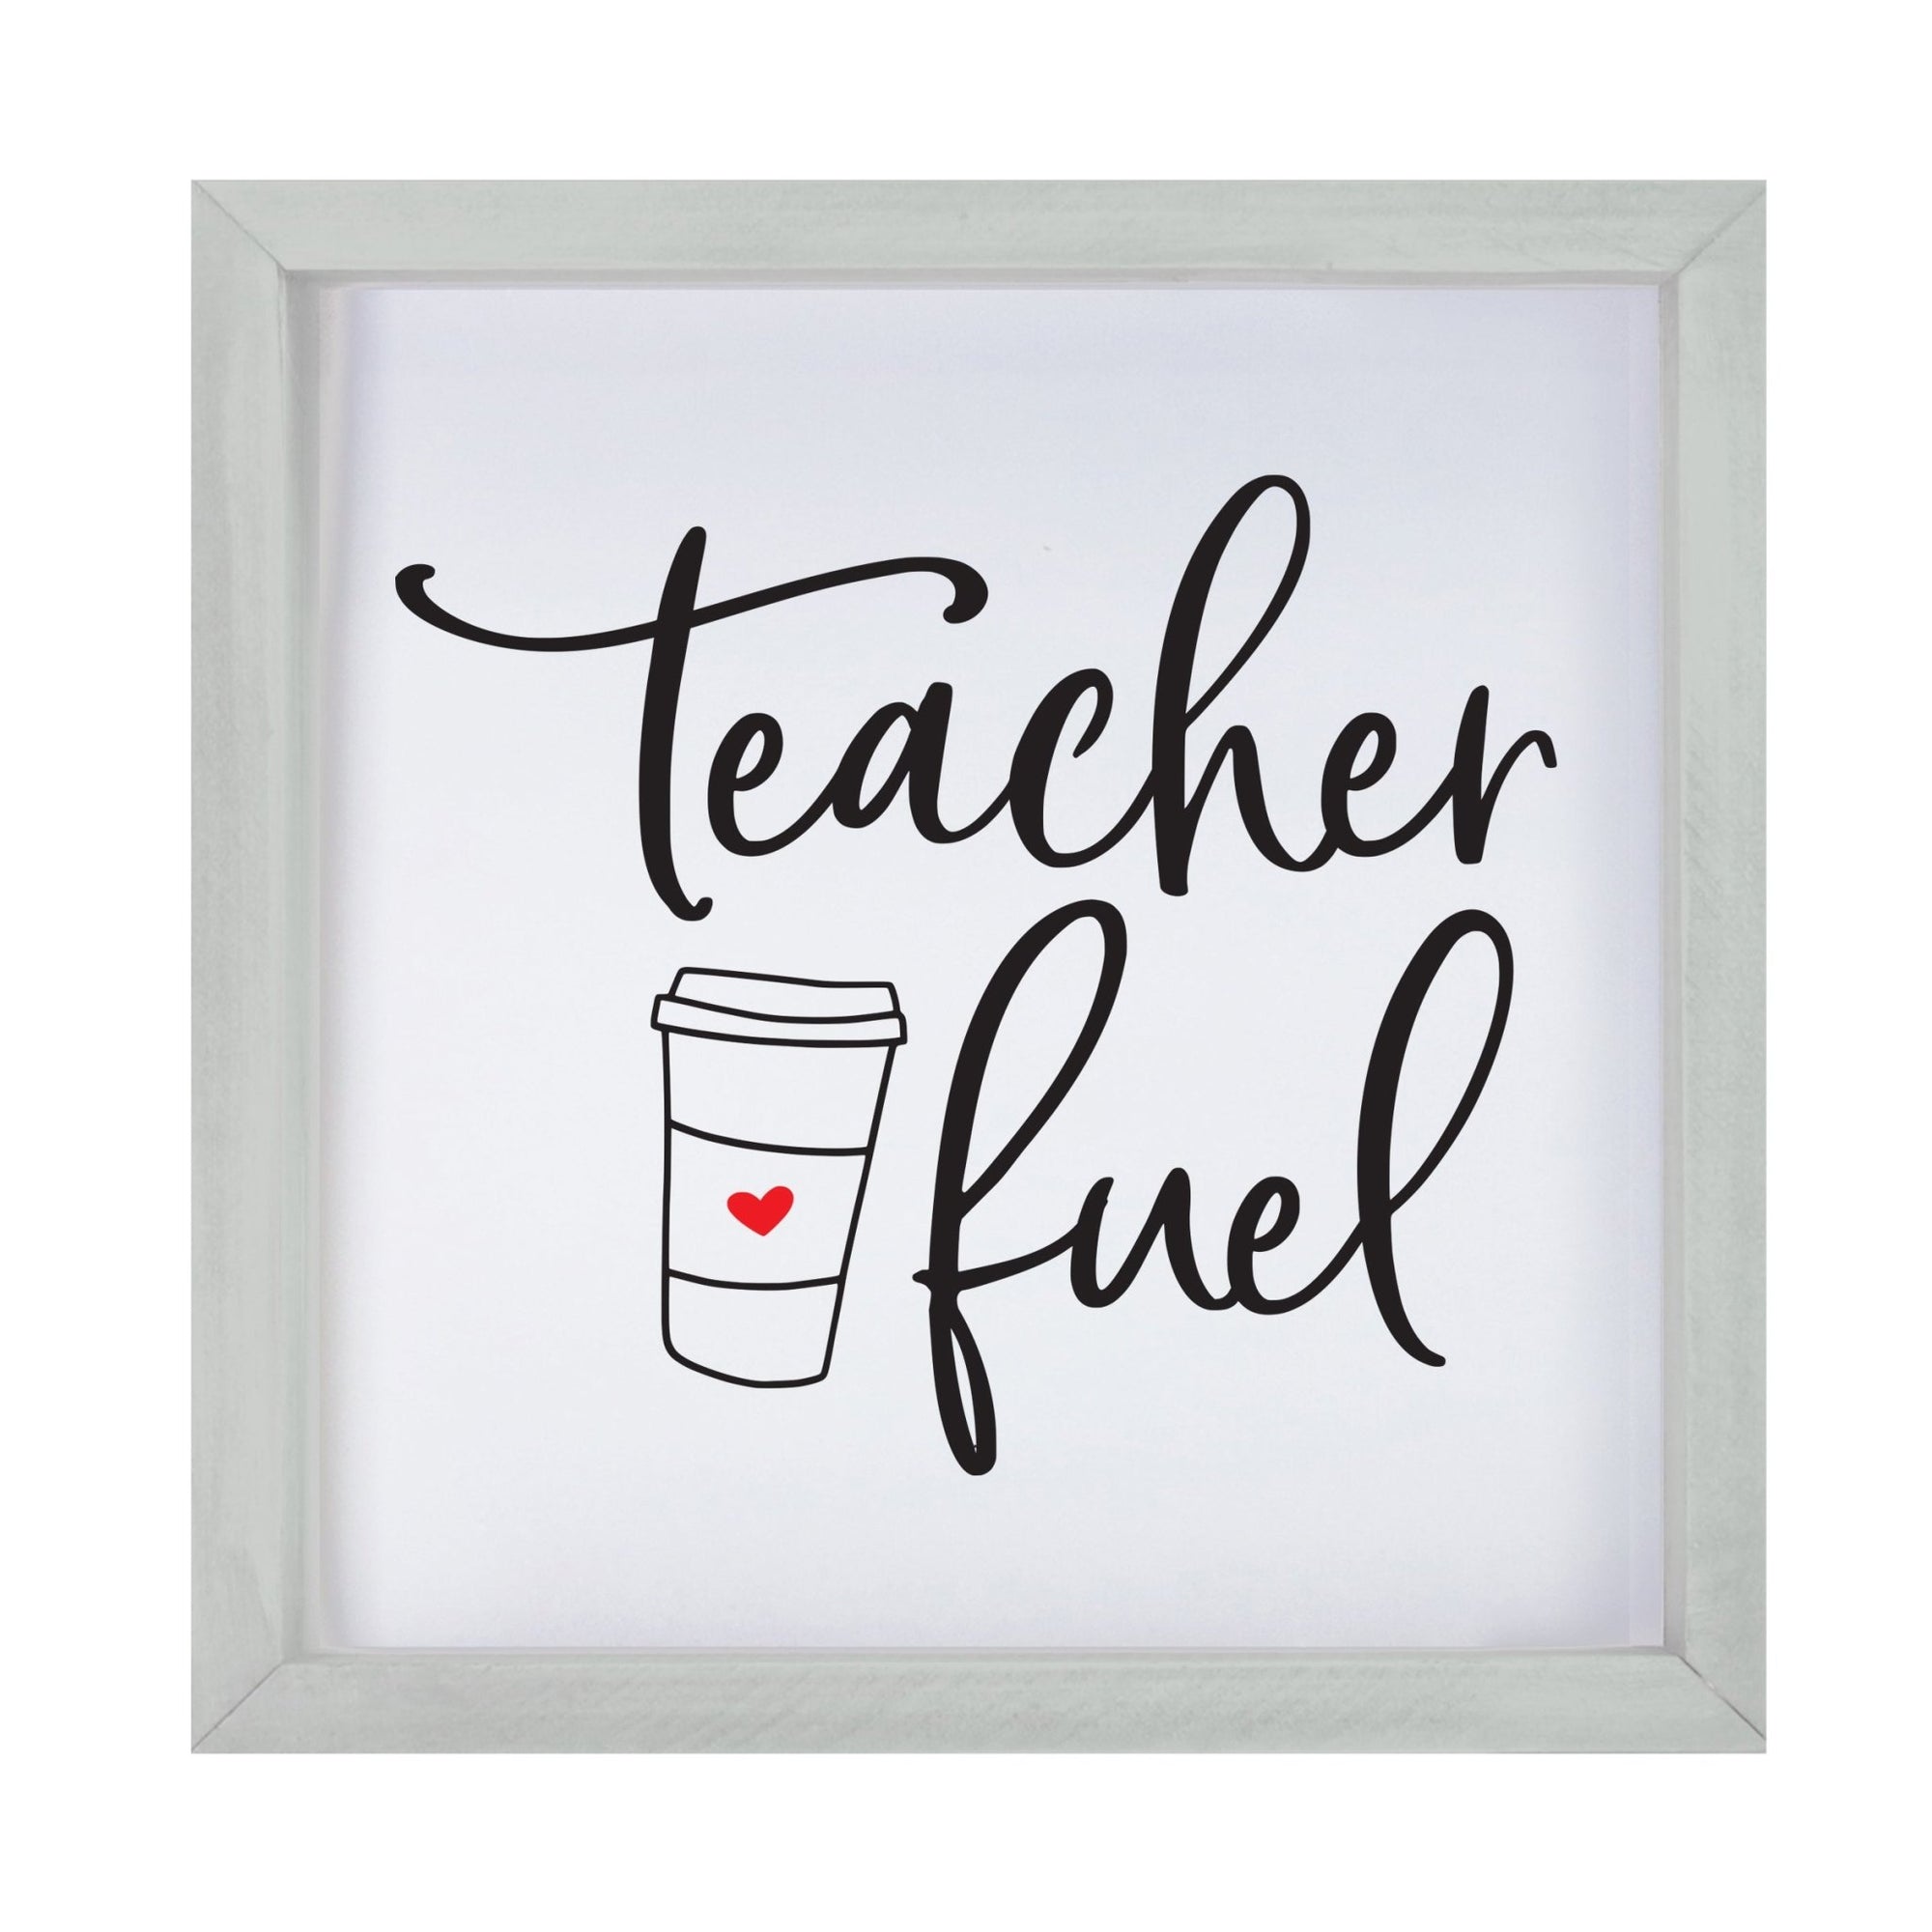 Inspiring Modern Framed Shadow Box 7x7in - Teacher Fuel - LifeSong Milestones